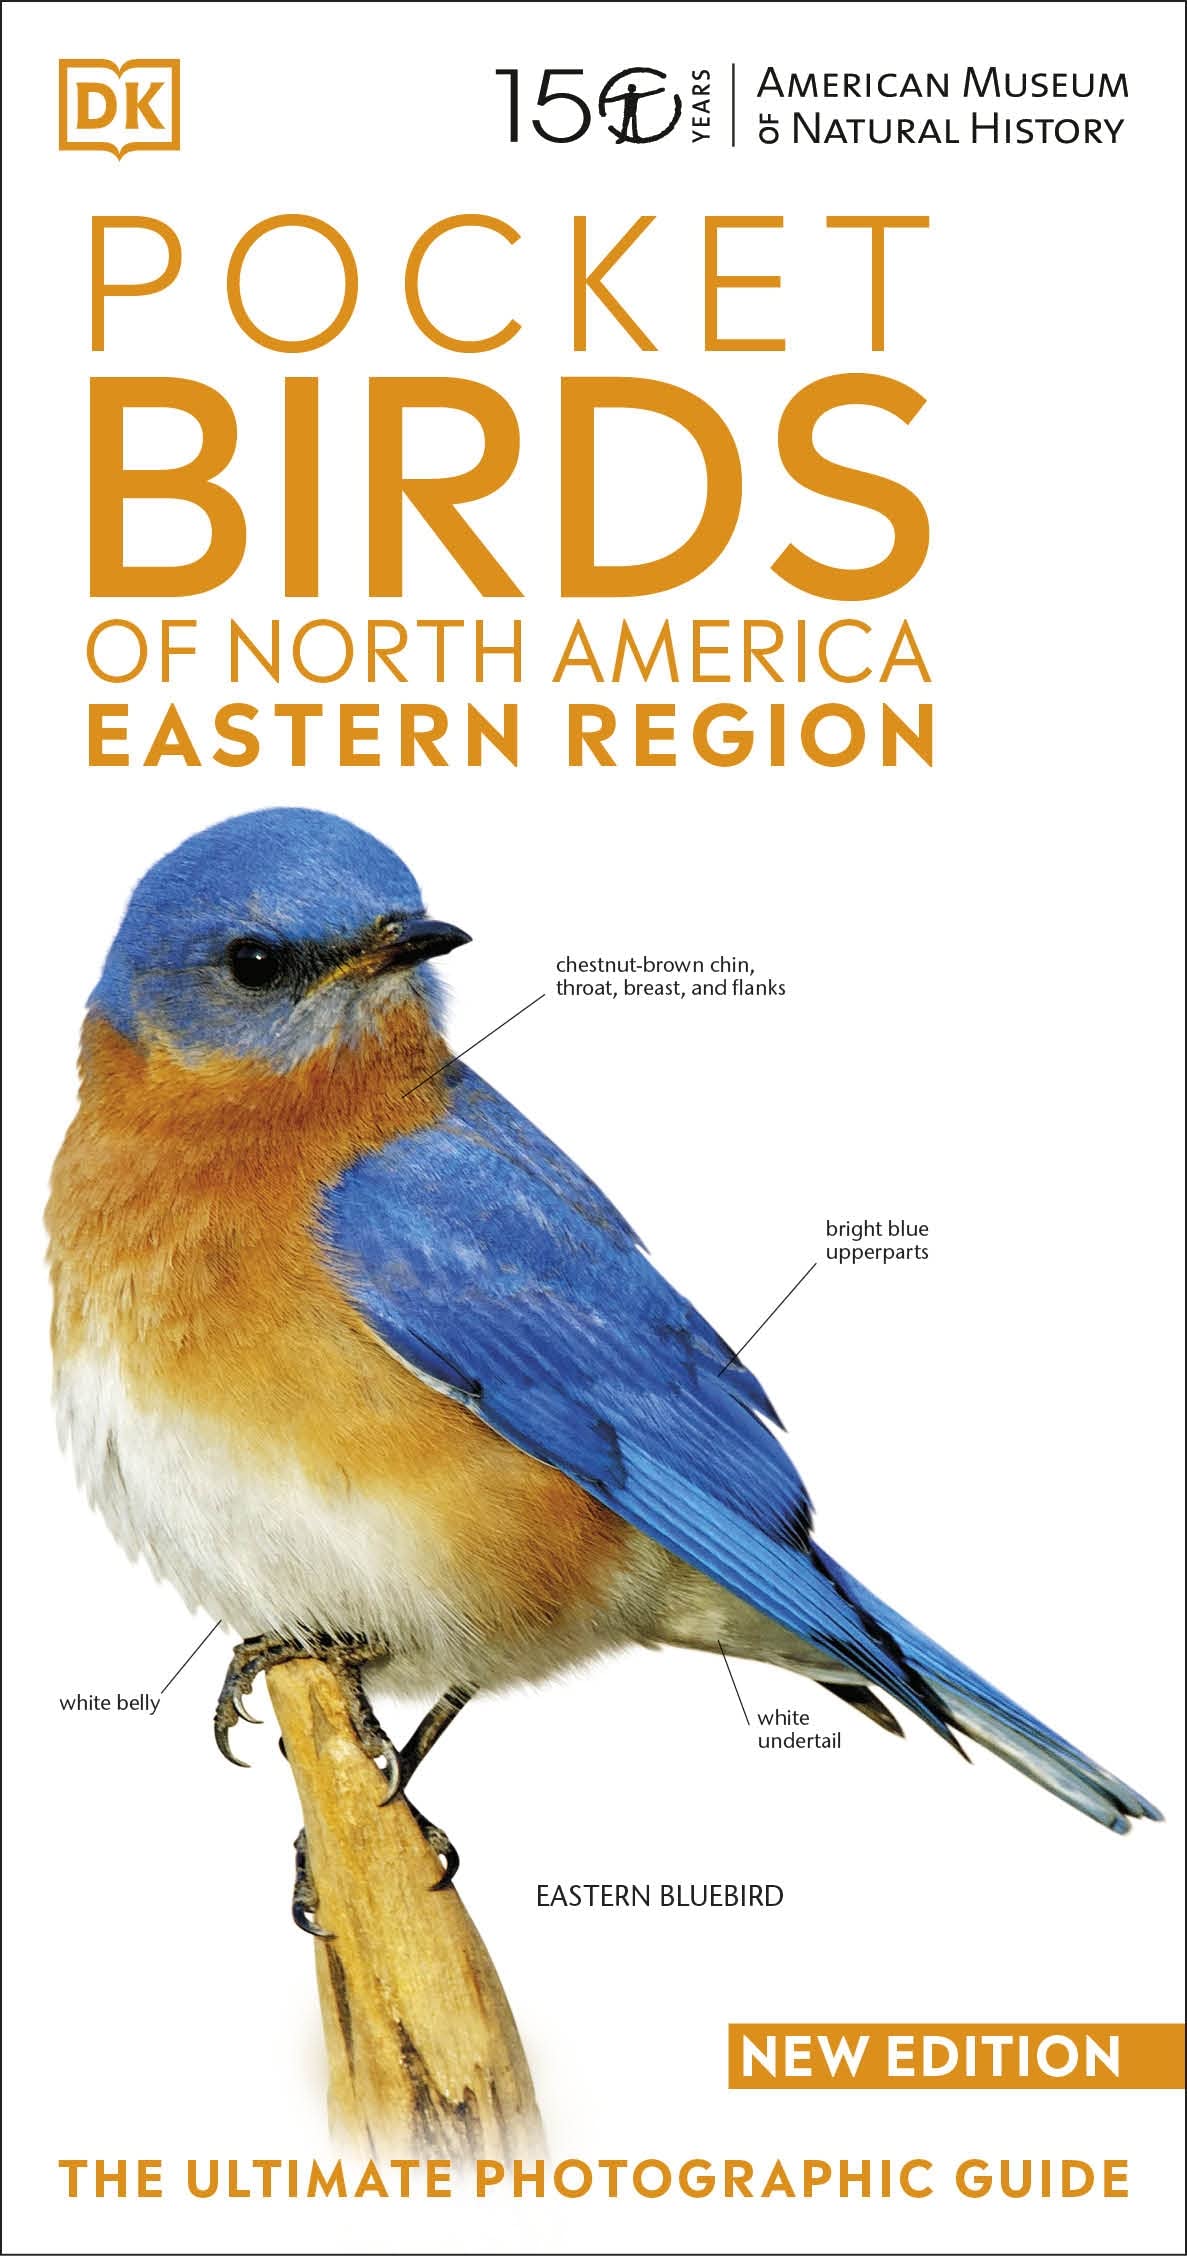 DK Pocket Birds of North America Eastern Region